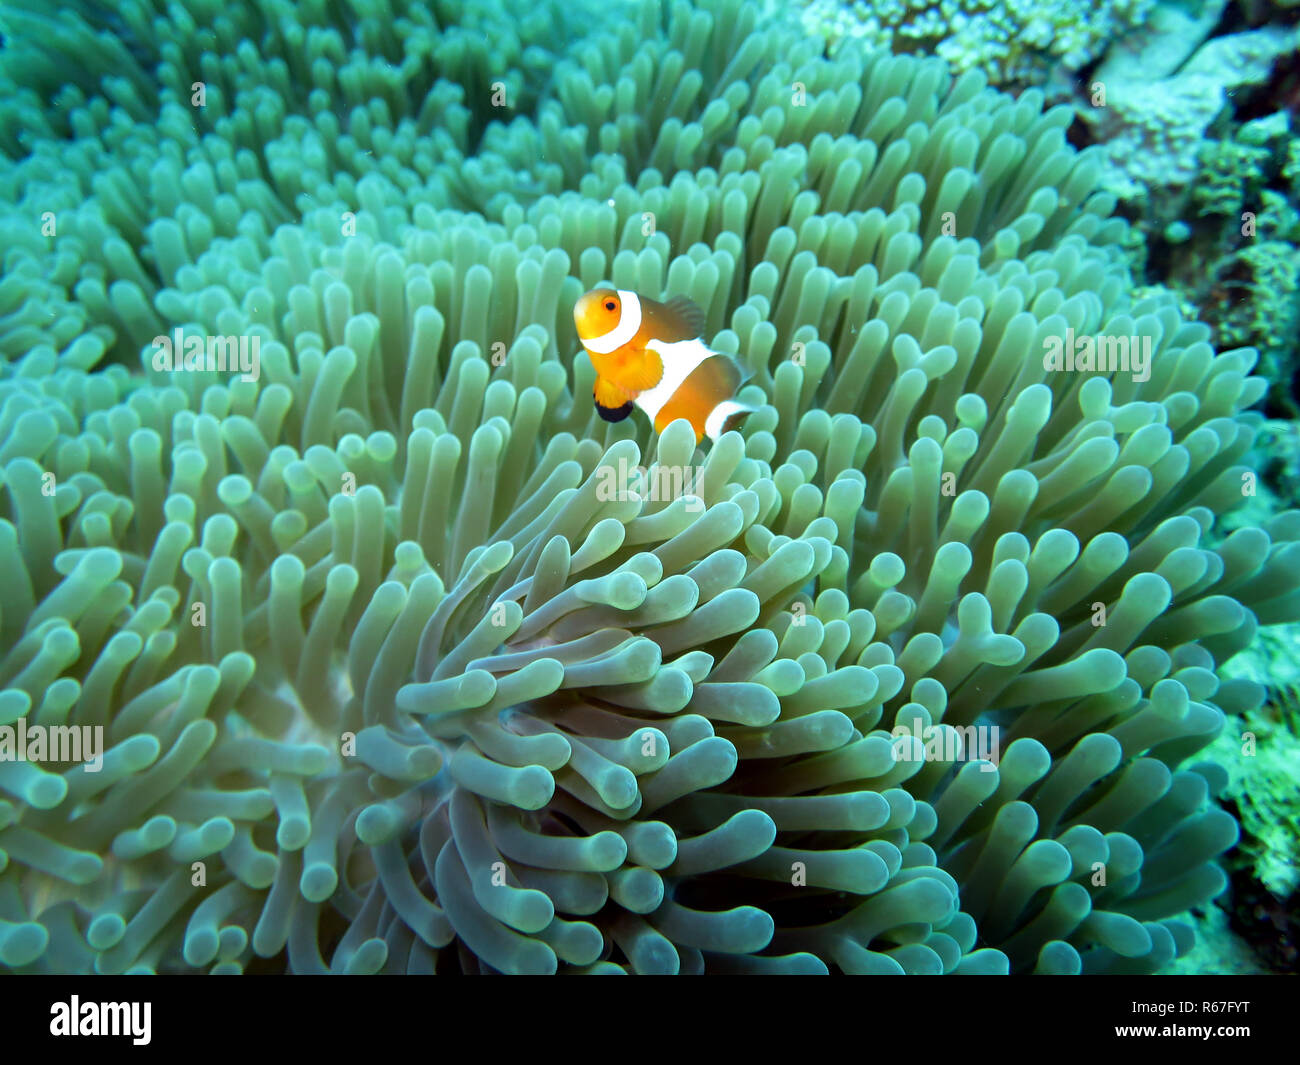 Falso - anemonefish payaso (amphiprion ocellaris) en una magnifica anémona (anemone o Mauricio heteractis magnifica),pintuyan,isla panaon,Leyte meridional,filipinas Foto de stock